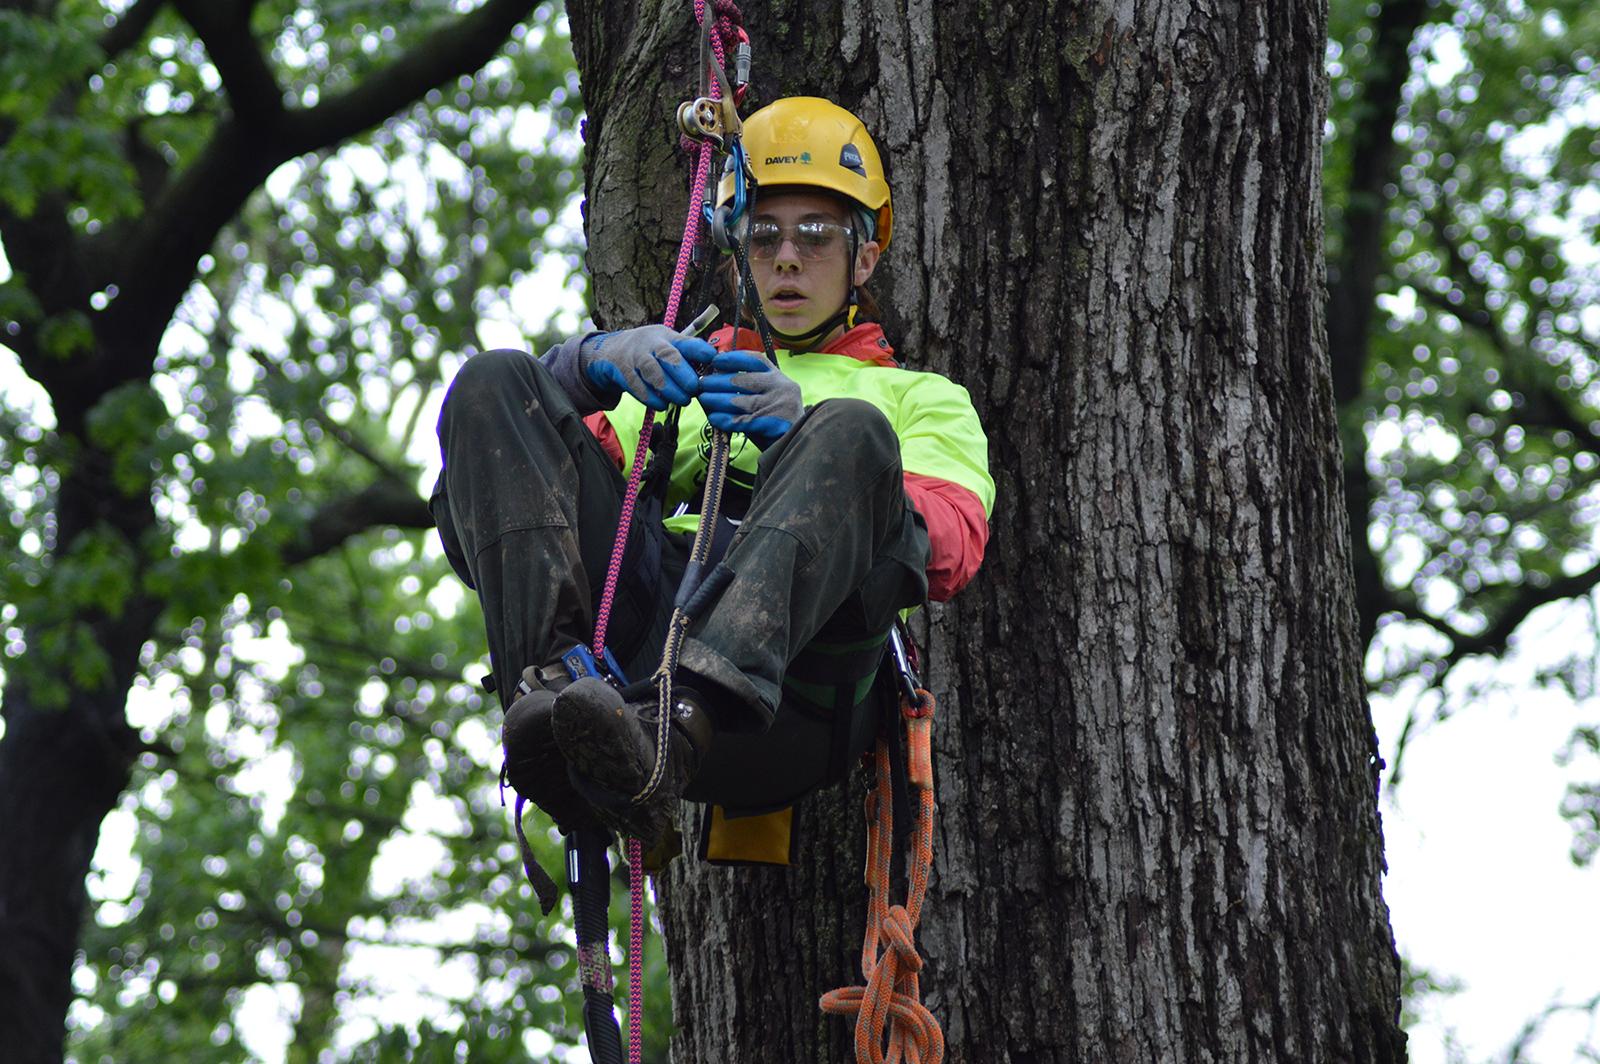 Saturday's event includes a climbing demonstration for kids. (April Toney / Illinois Arborist Association)